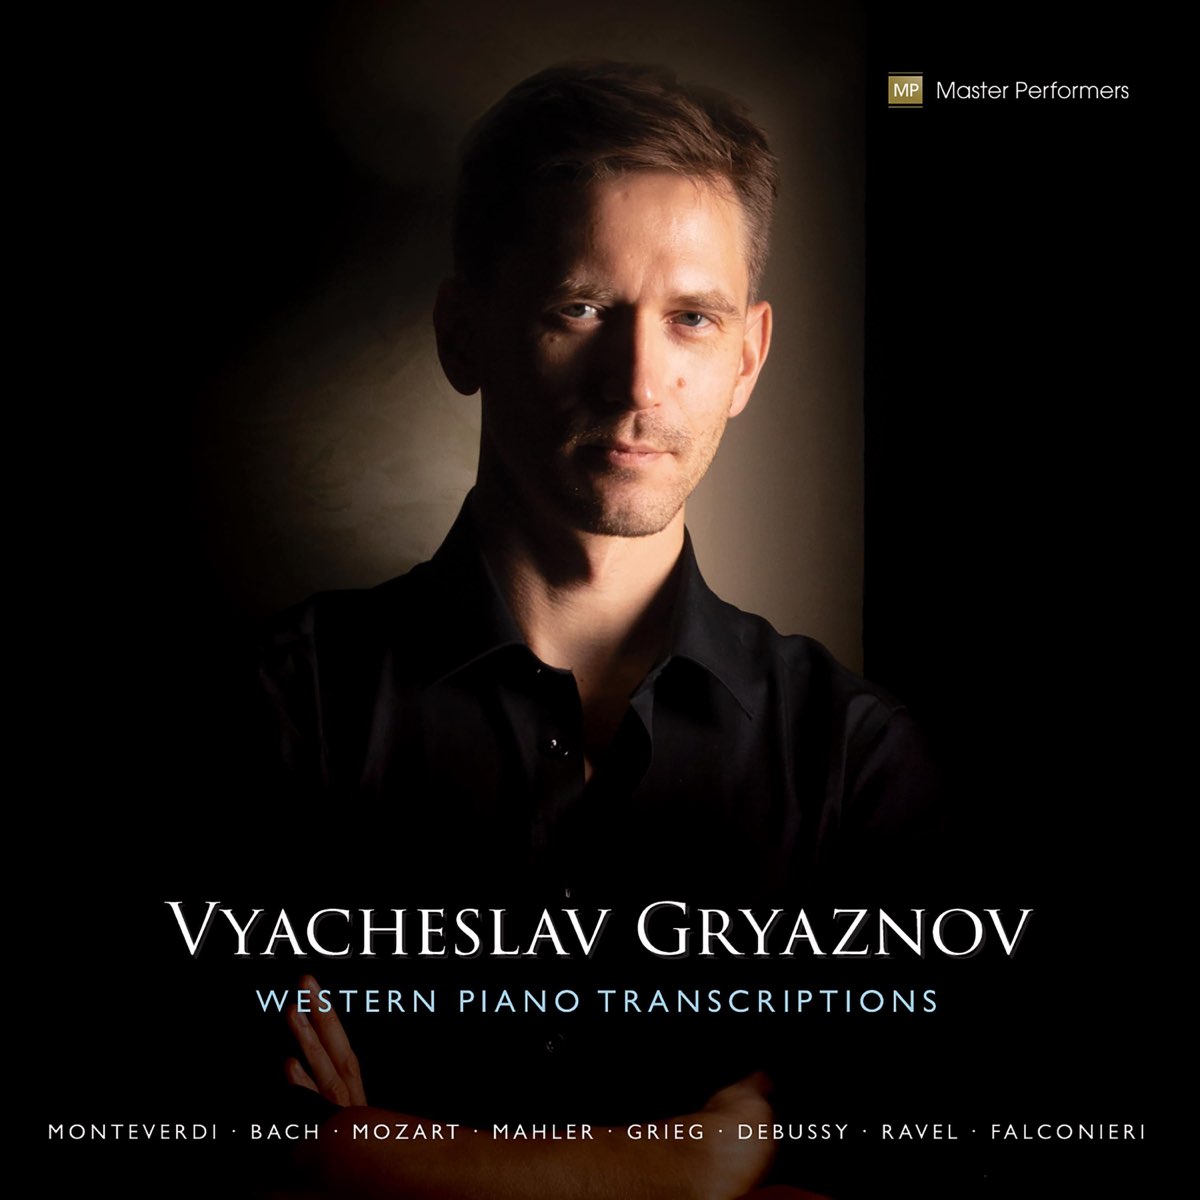 ‎Western Piano Transcriptions by Vyacheslav Gryaznov on Apple Music